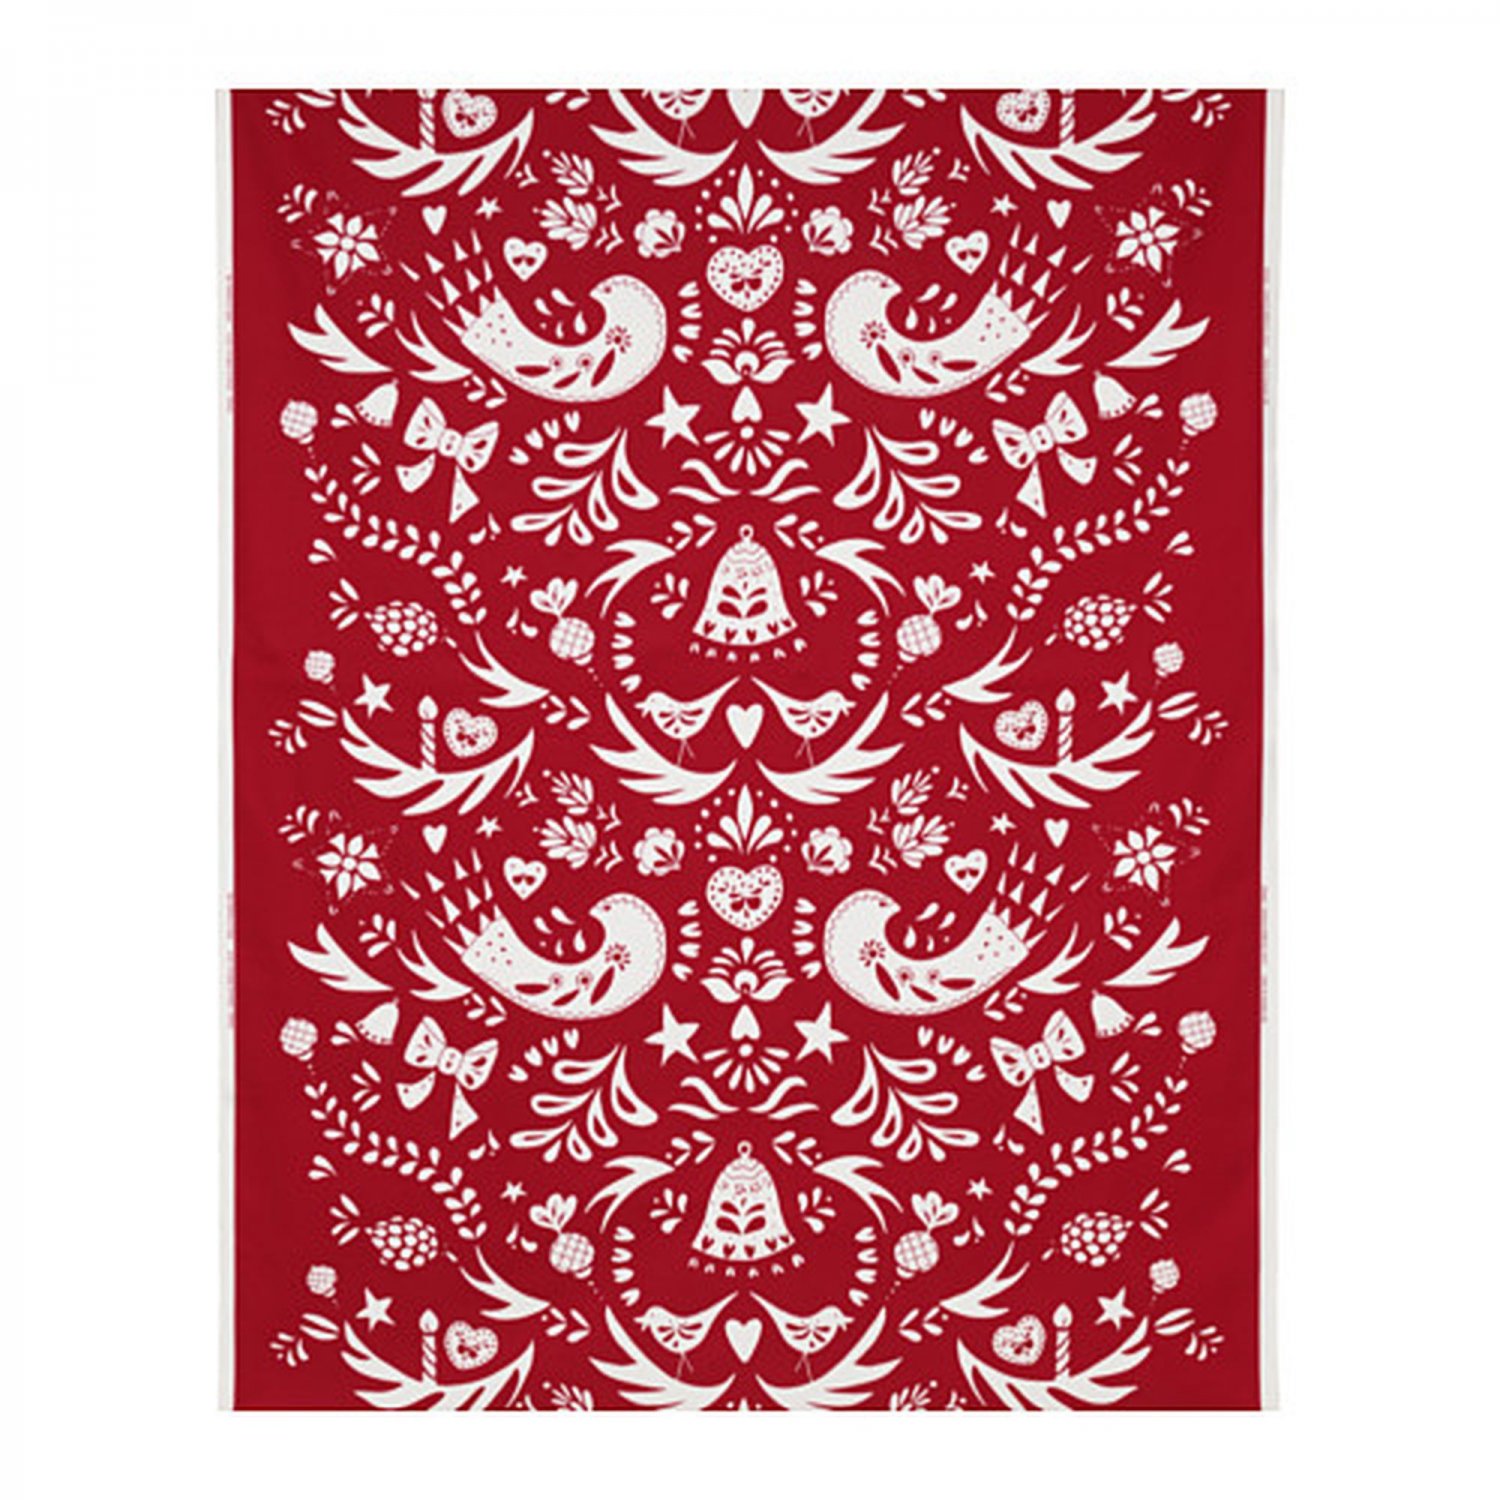 IKEA Vinter 2016 Fabric Material RED on White Scandinavian 